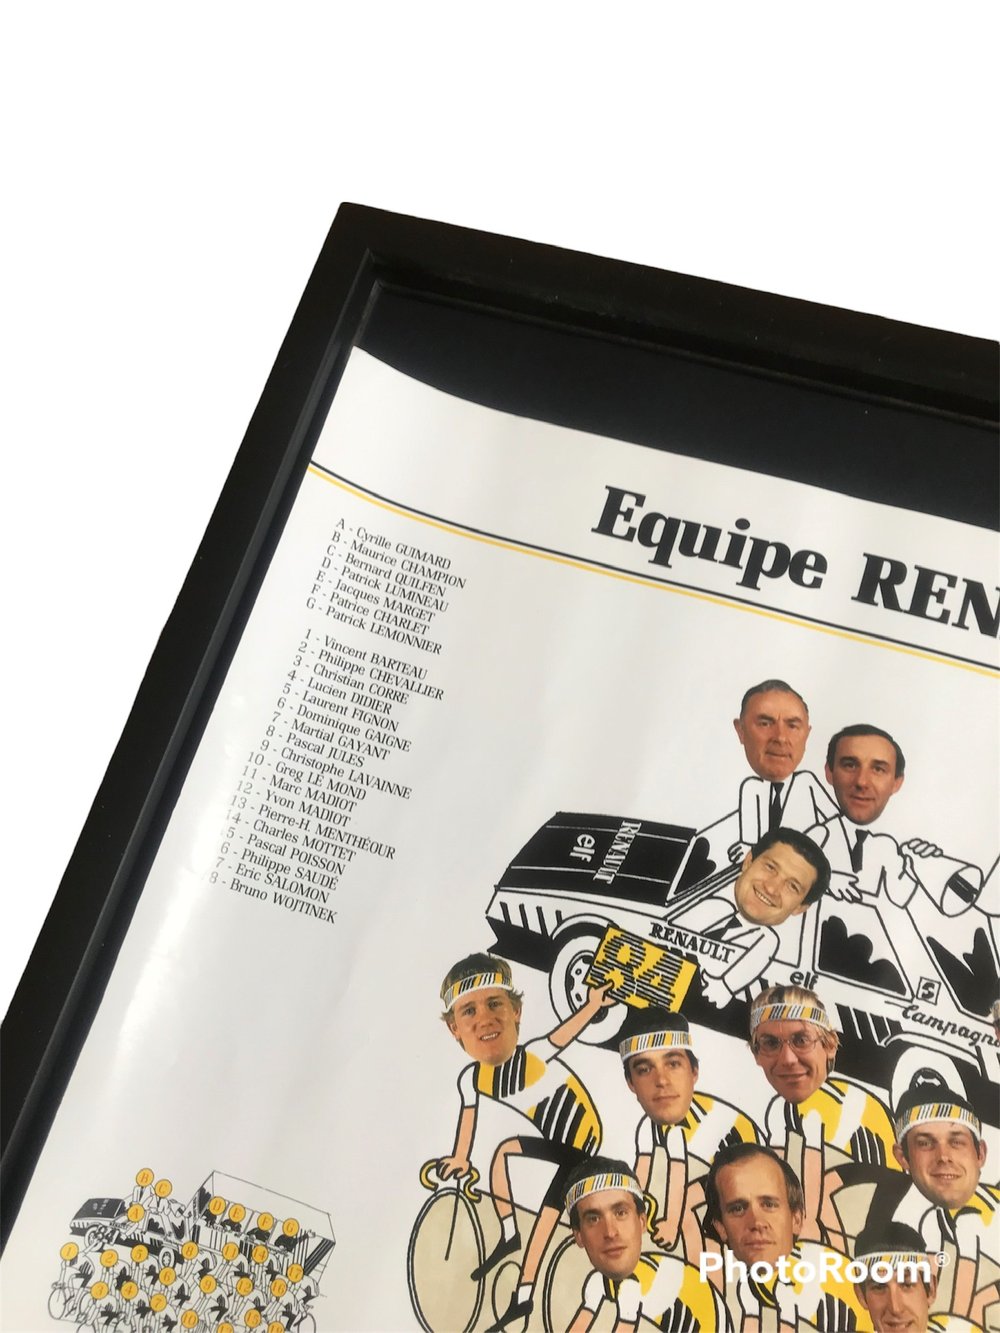 Renault Elf cycling team musette bag